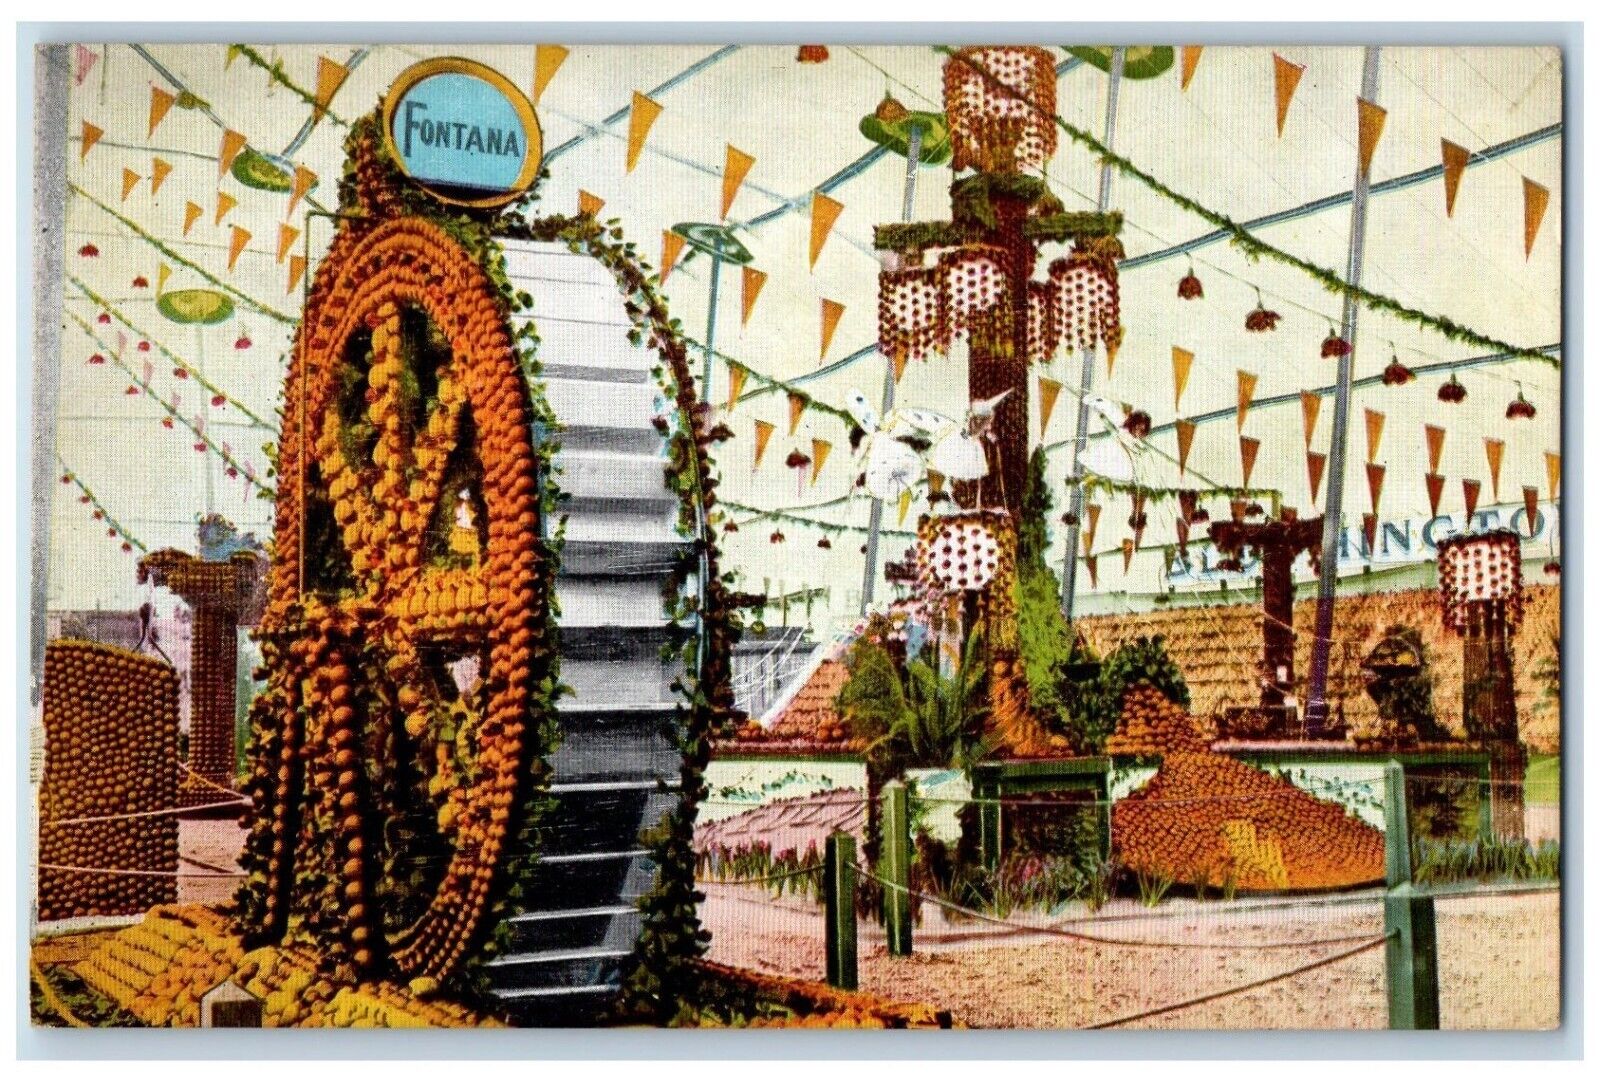 c1910 Waterwheel Fontana National Orange Show San Bernardino California Postcard